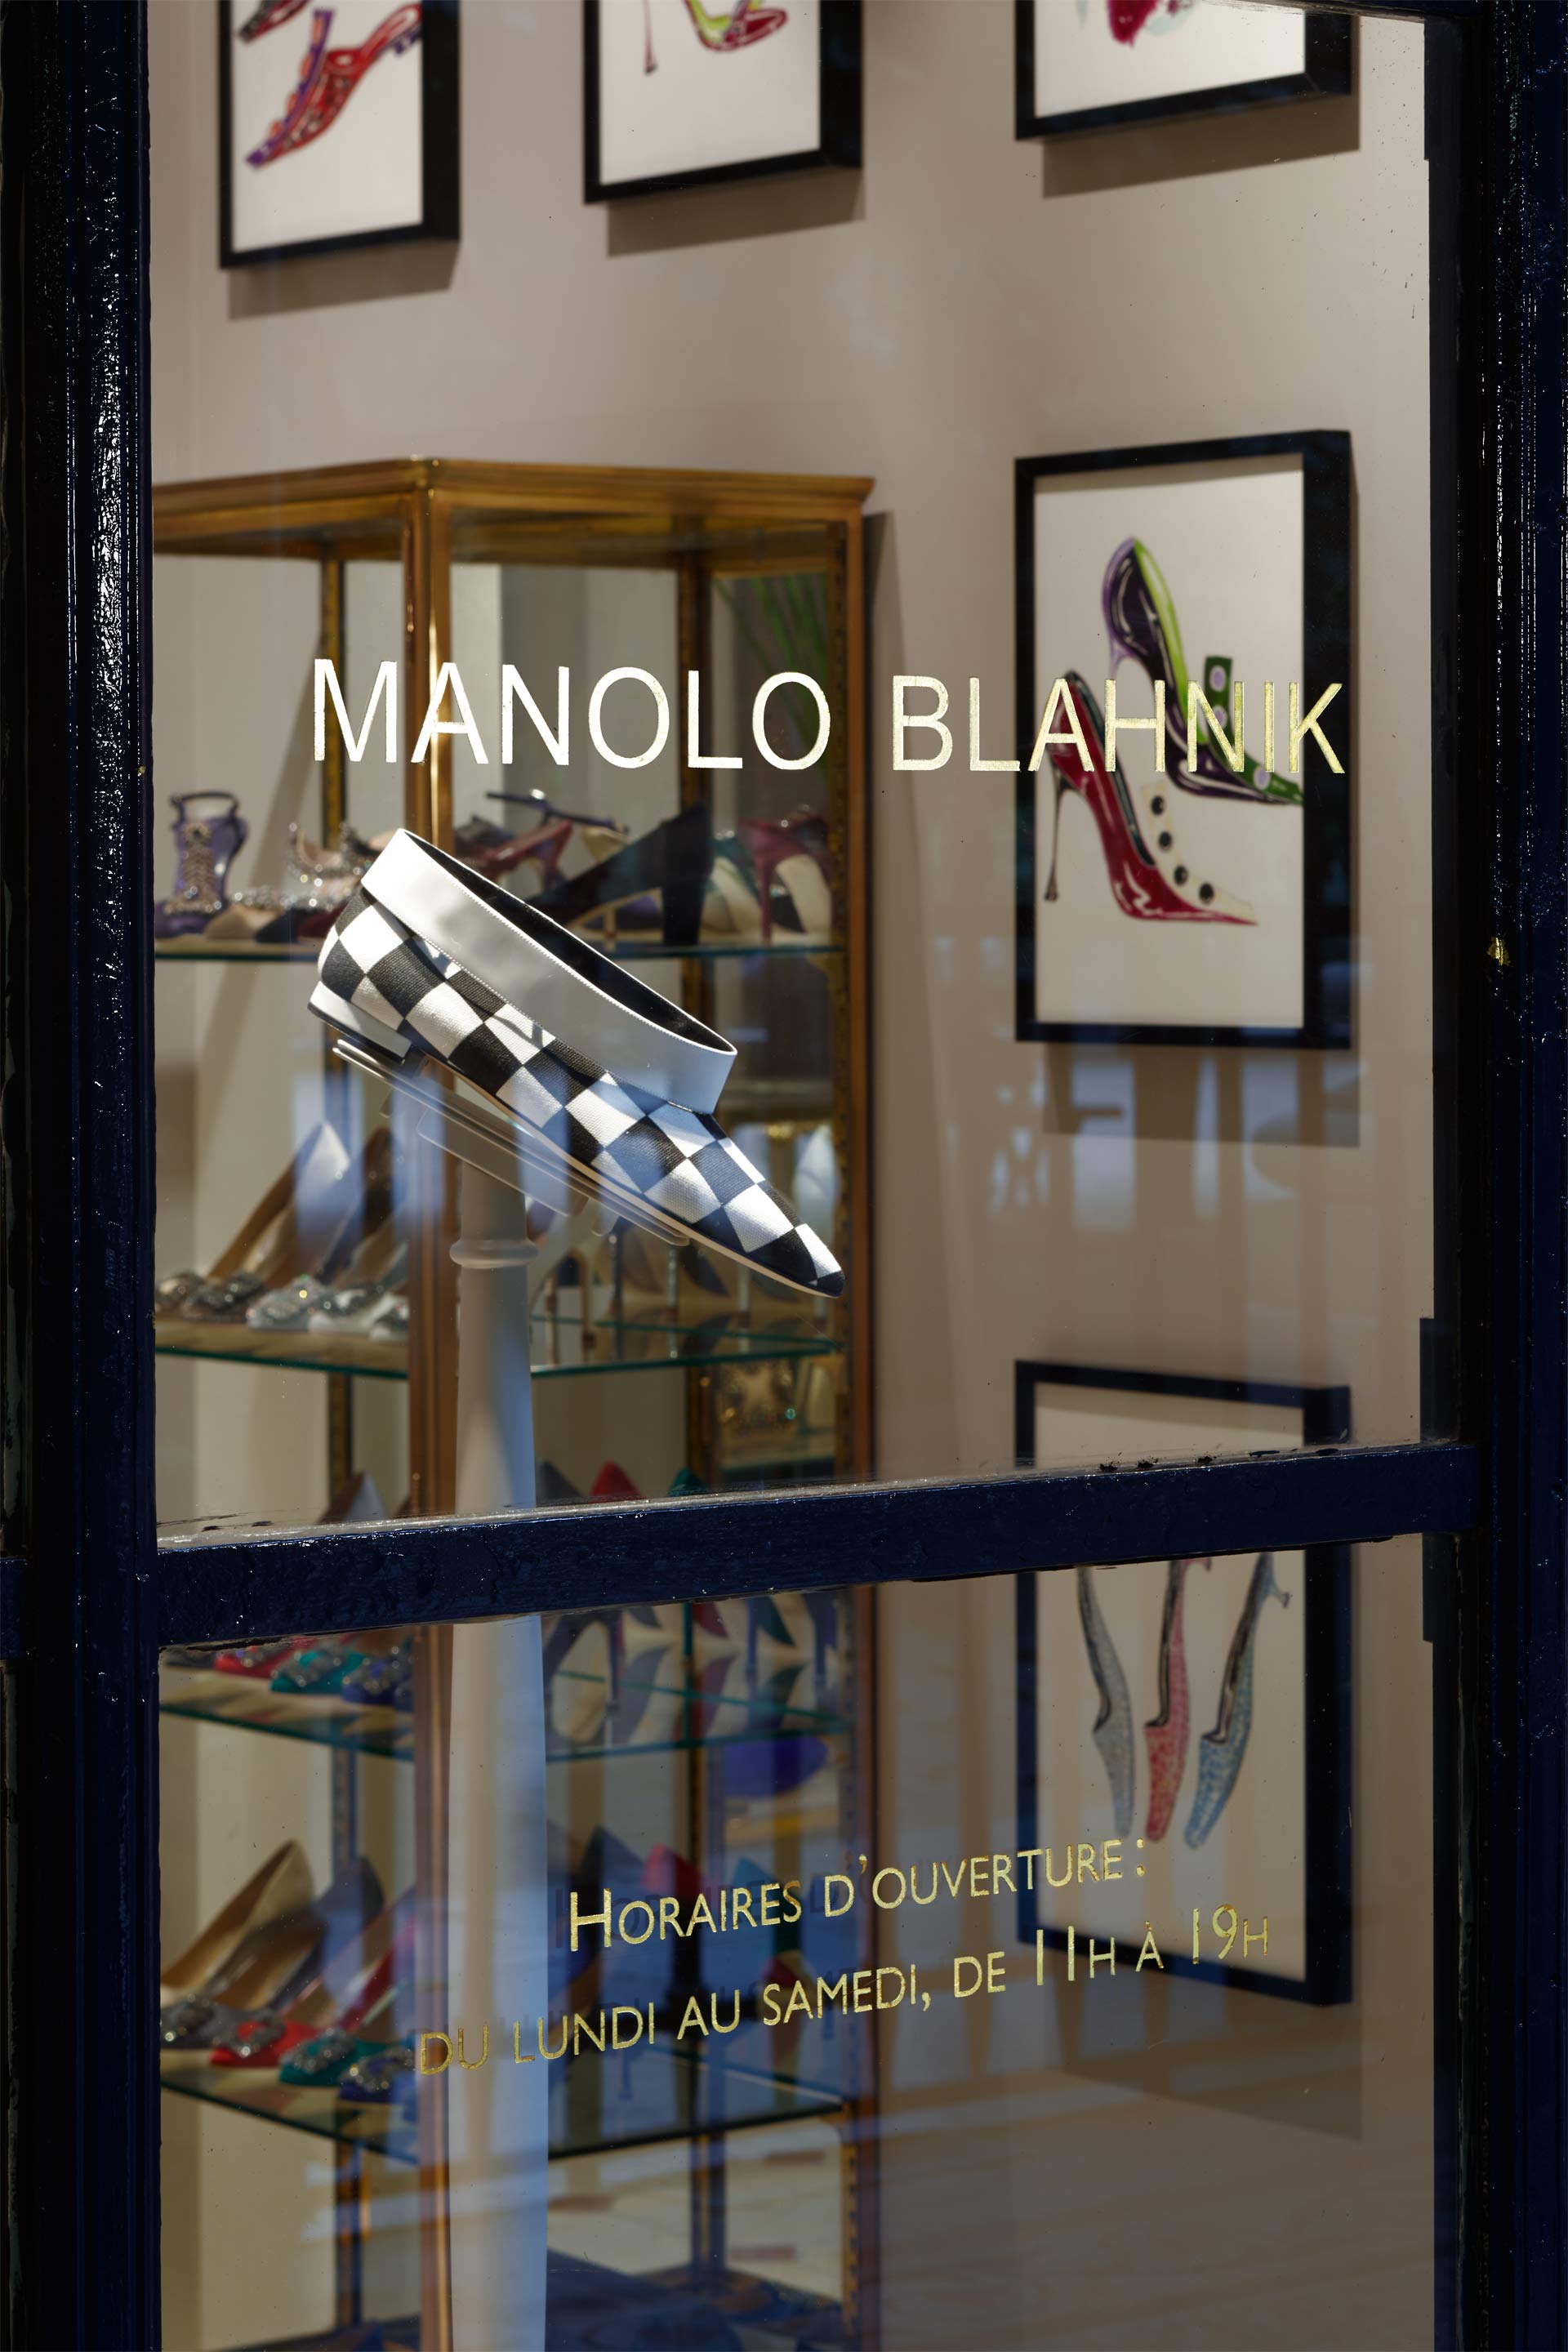 The Manolo Blahnik retail store @ Palais Royal, Paris